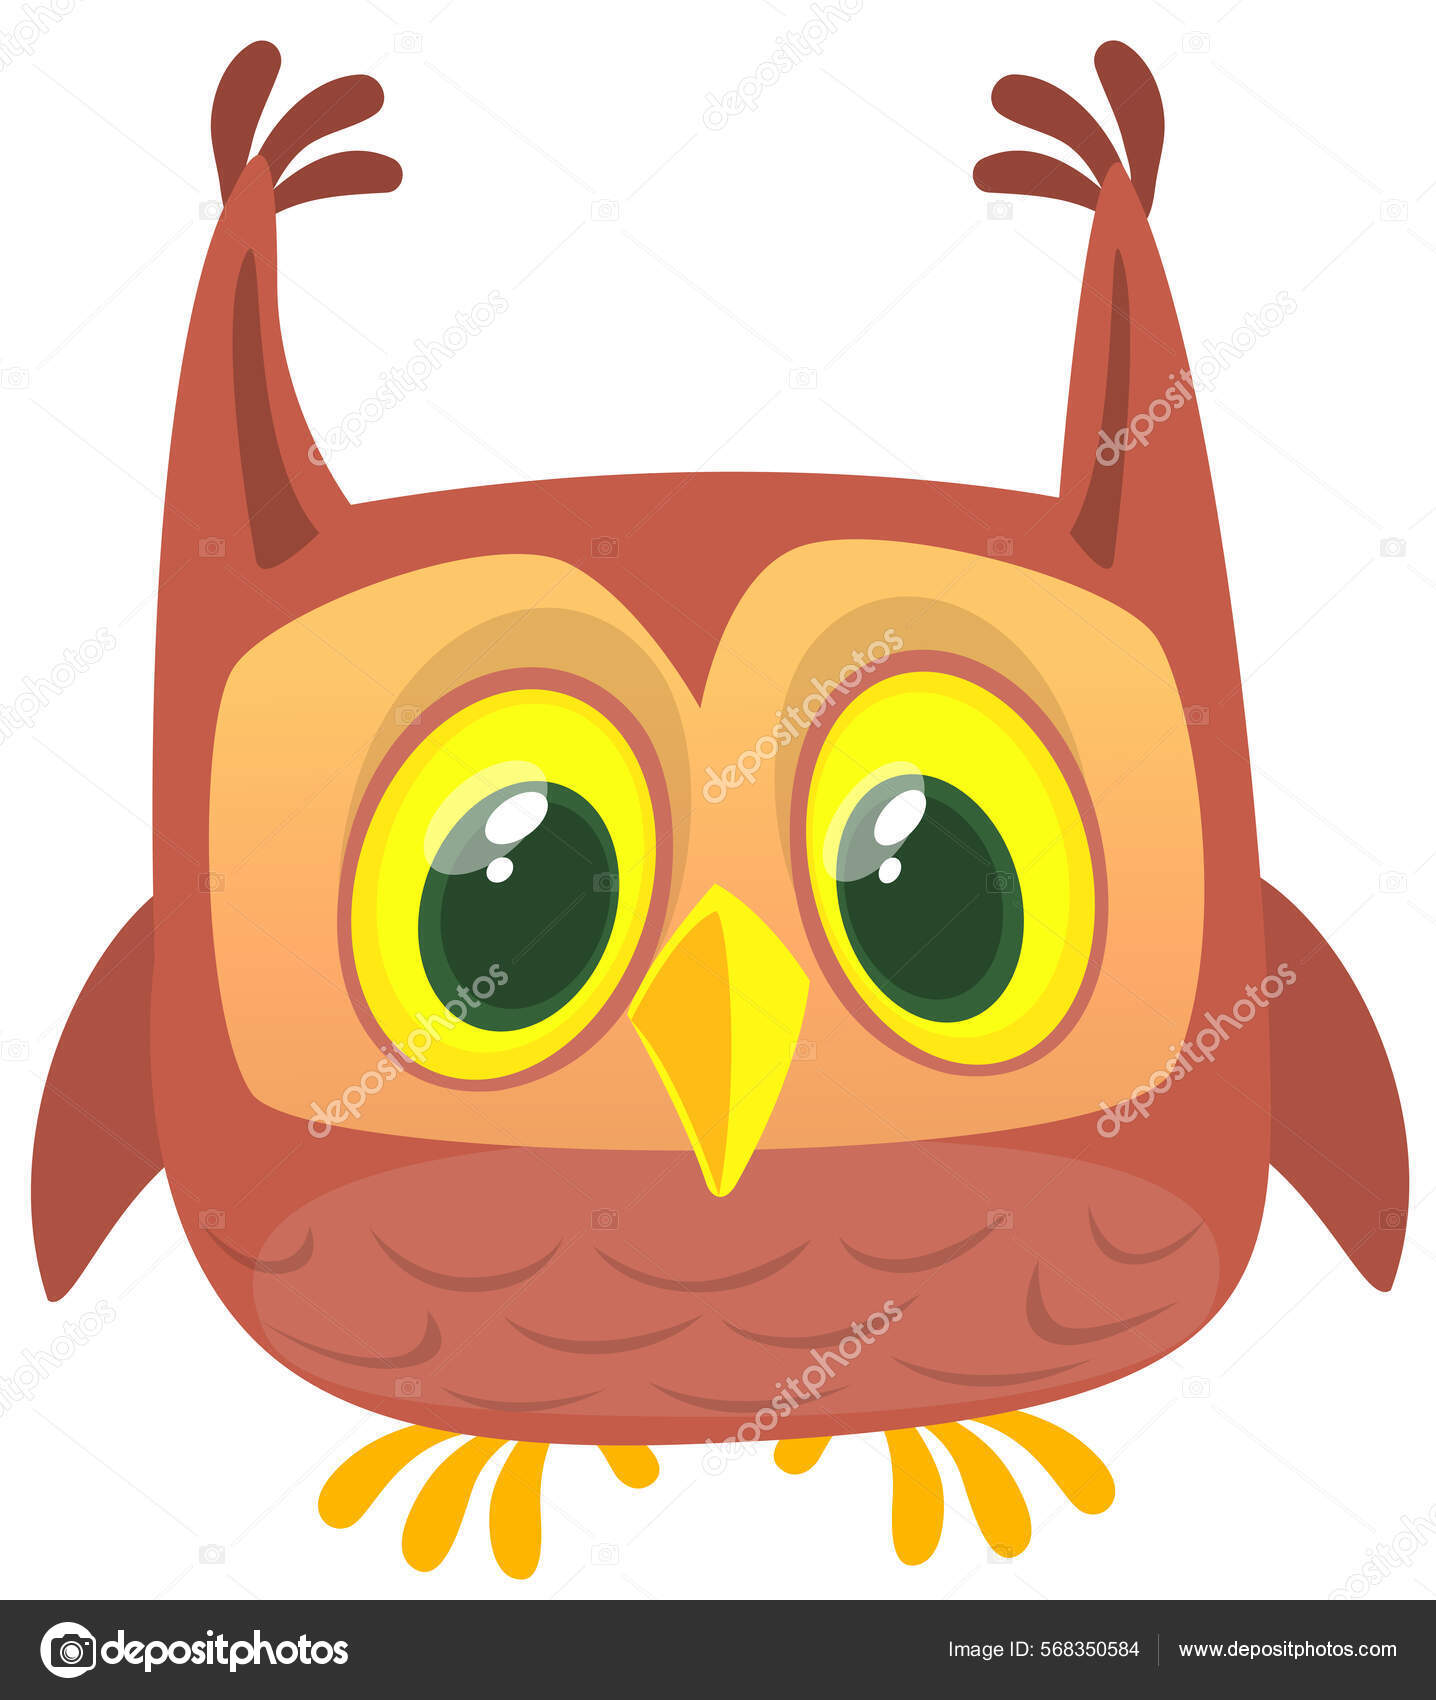 Owl clipart Vector Art Stock Images | Depositphotos